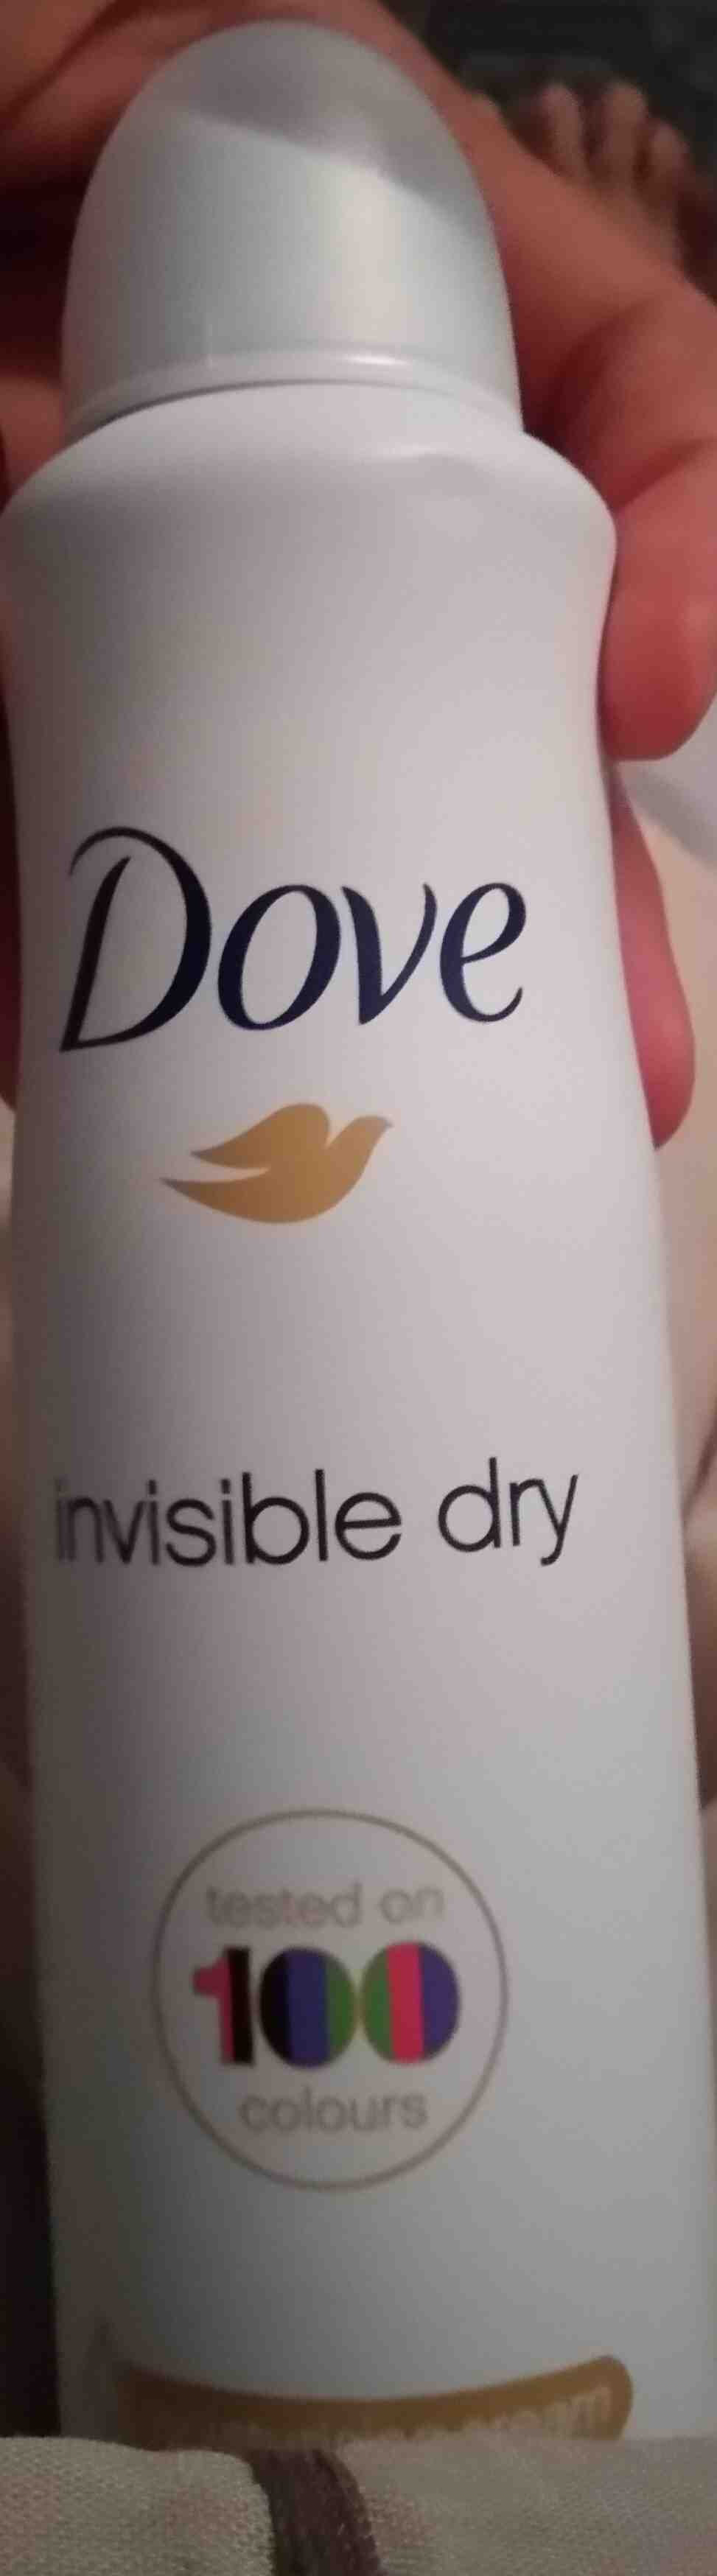 Invisible Dry - Ingredientes - en